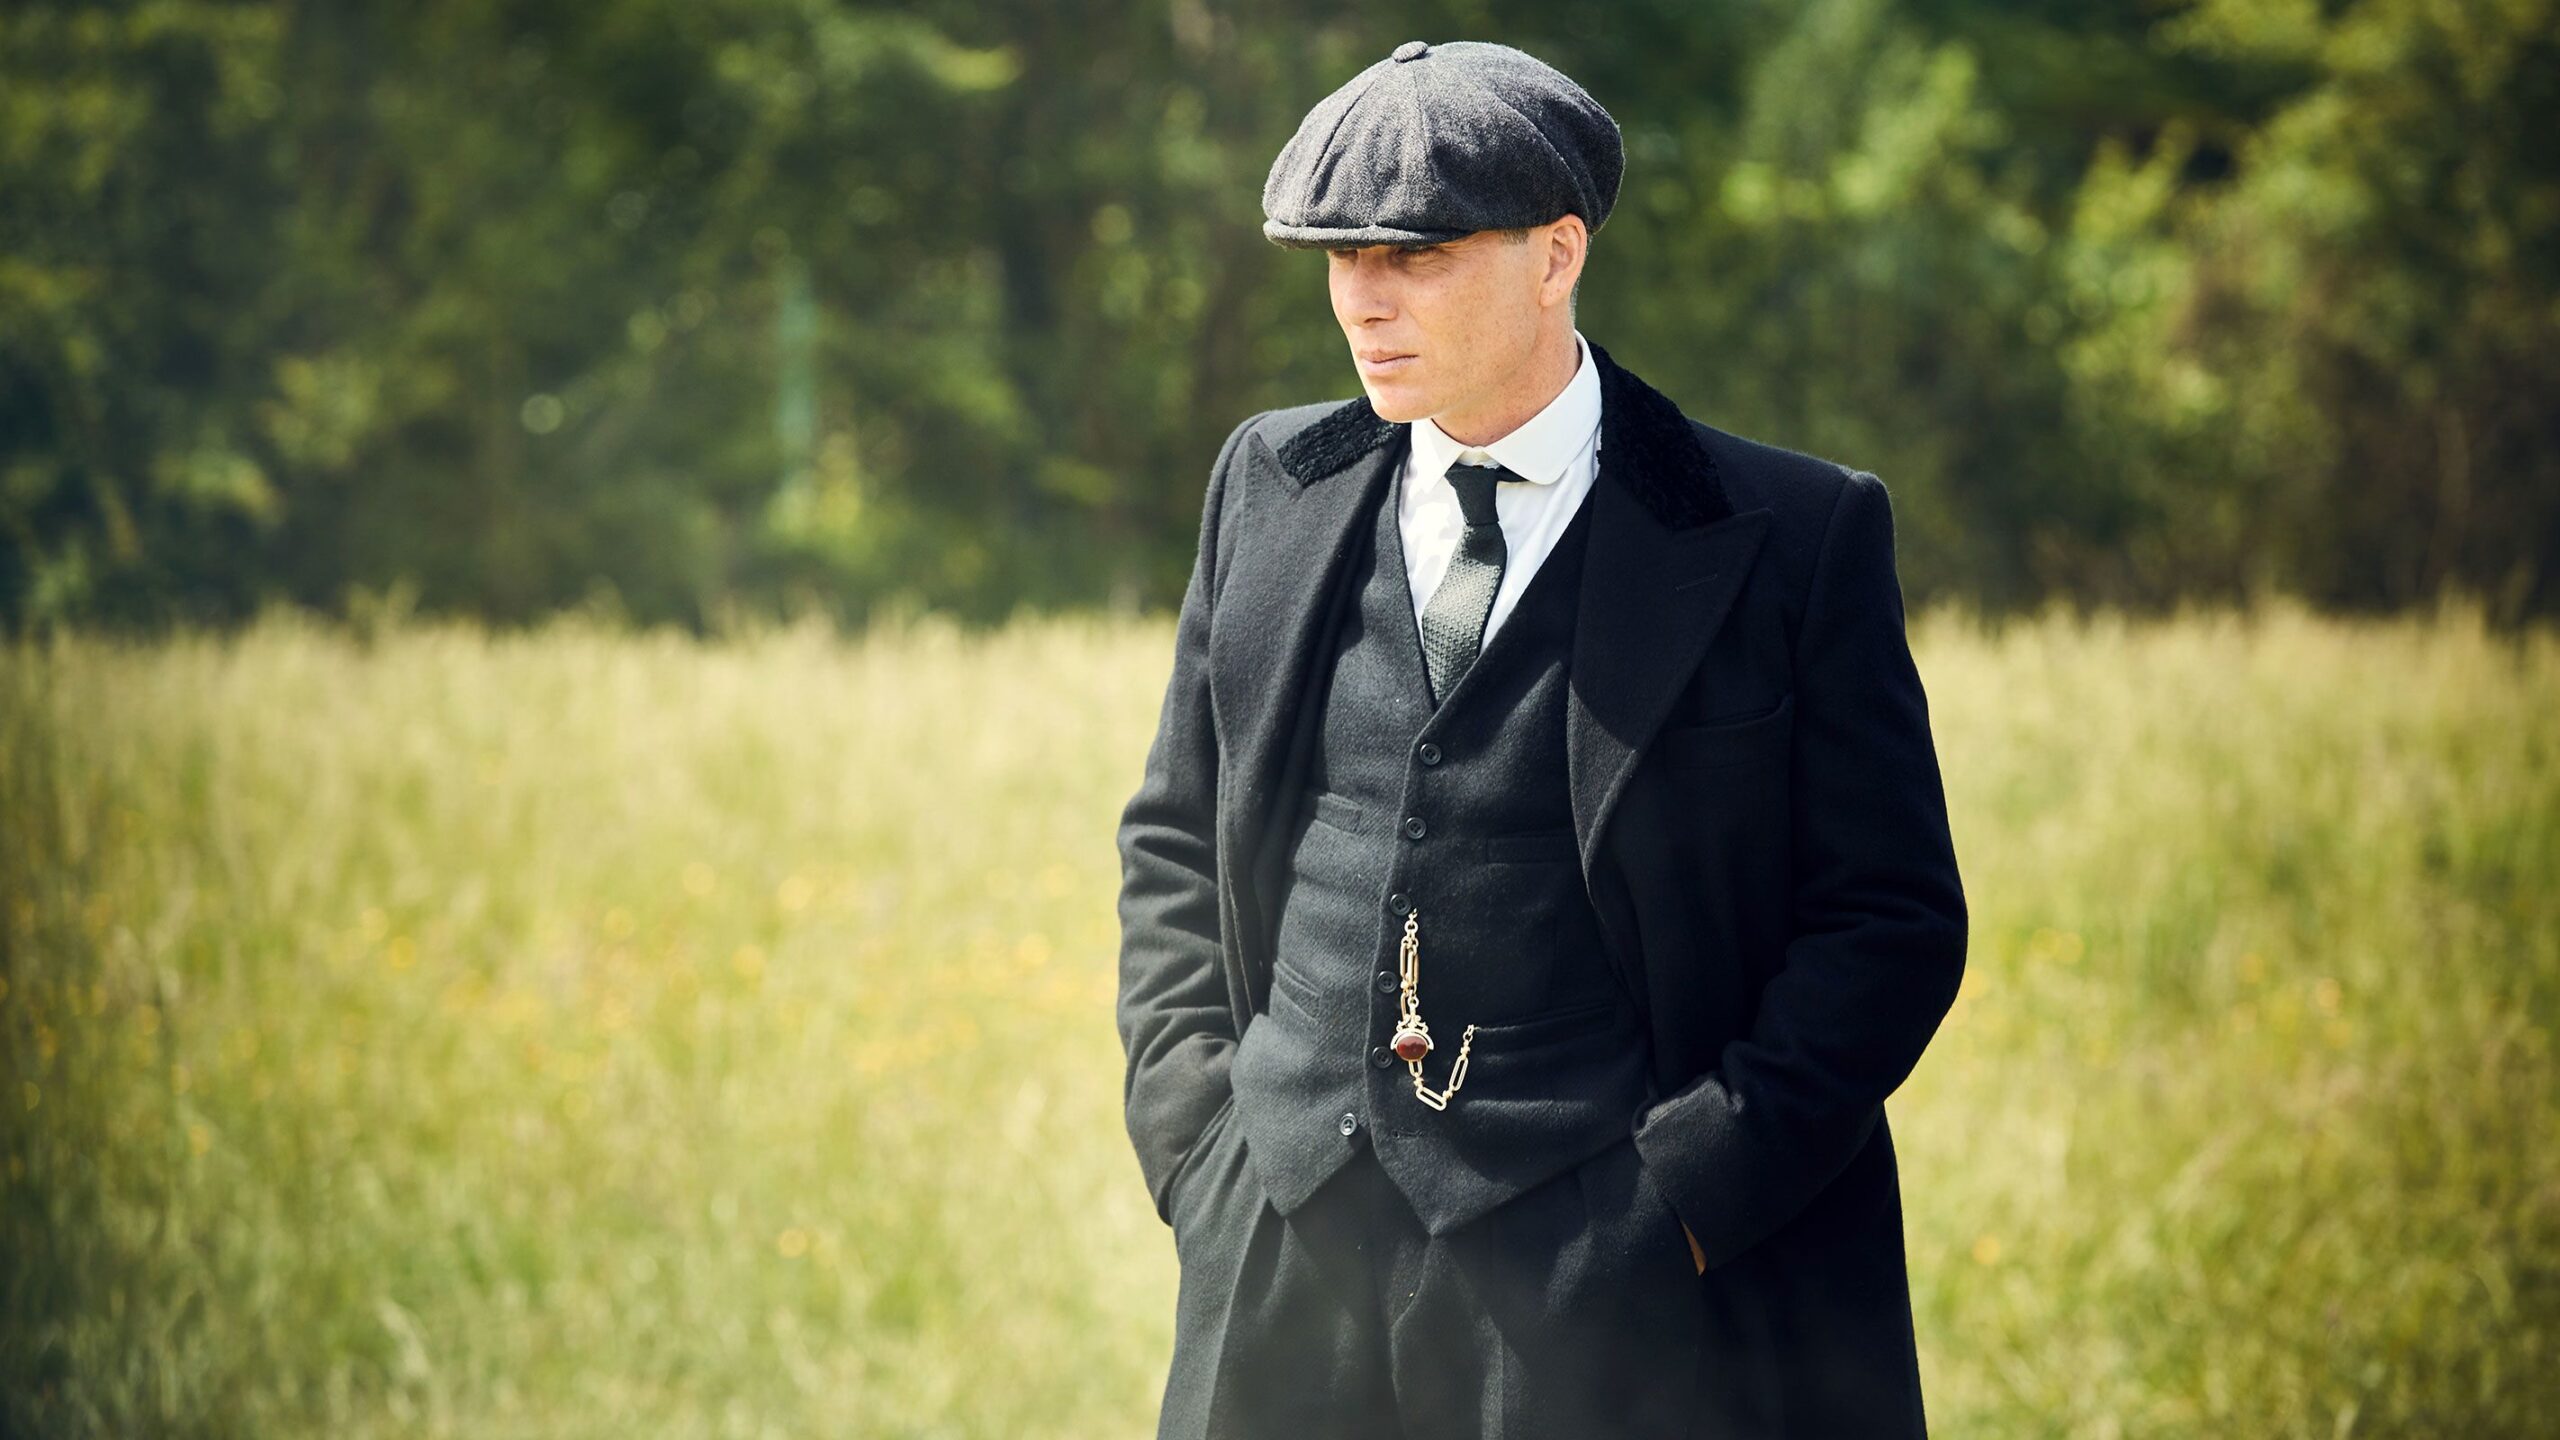 Cillian Murphy returning for ‘Peaky Blinders’ movie creator says - Entertainment - News